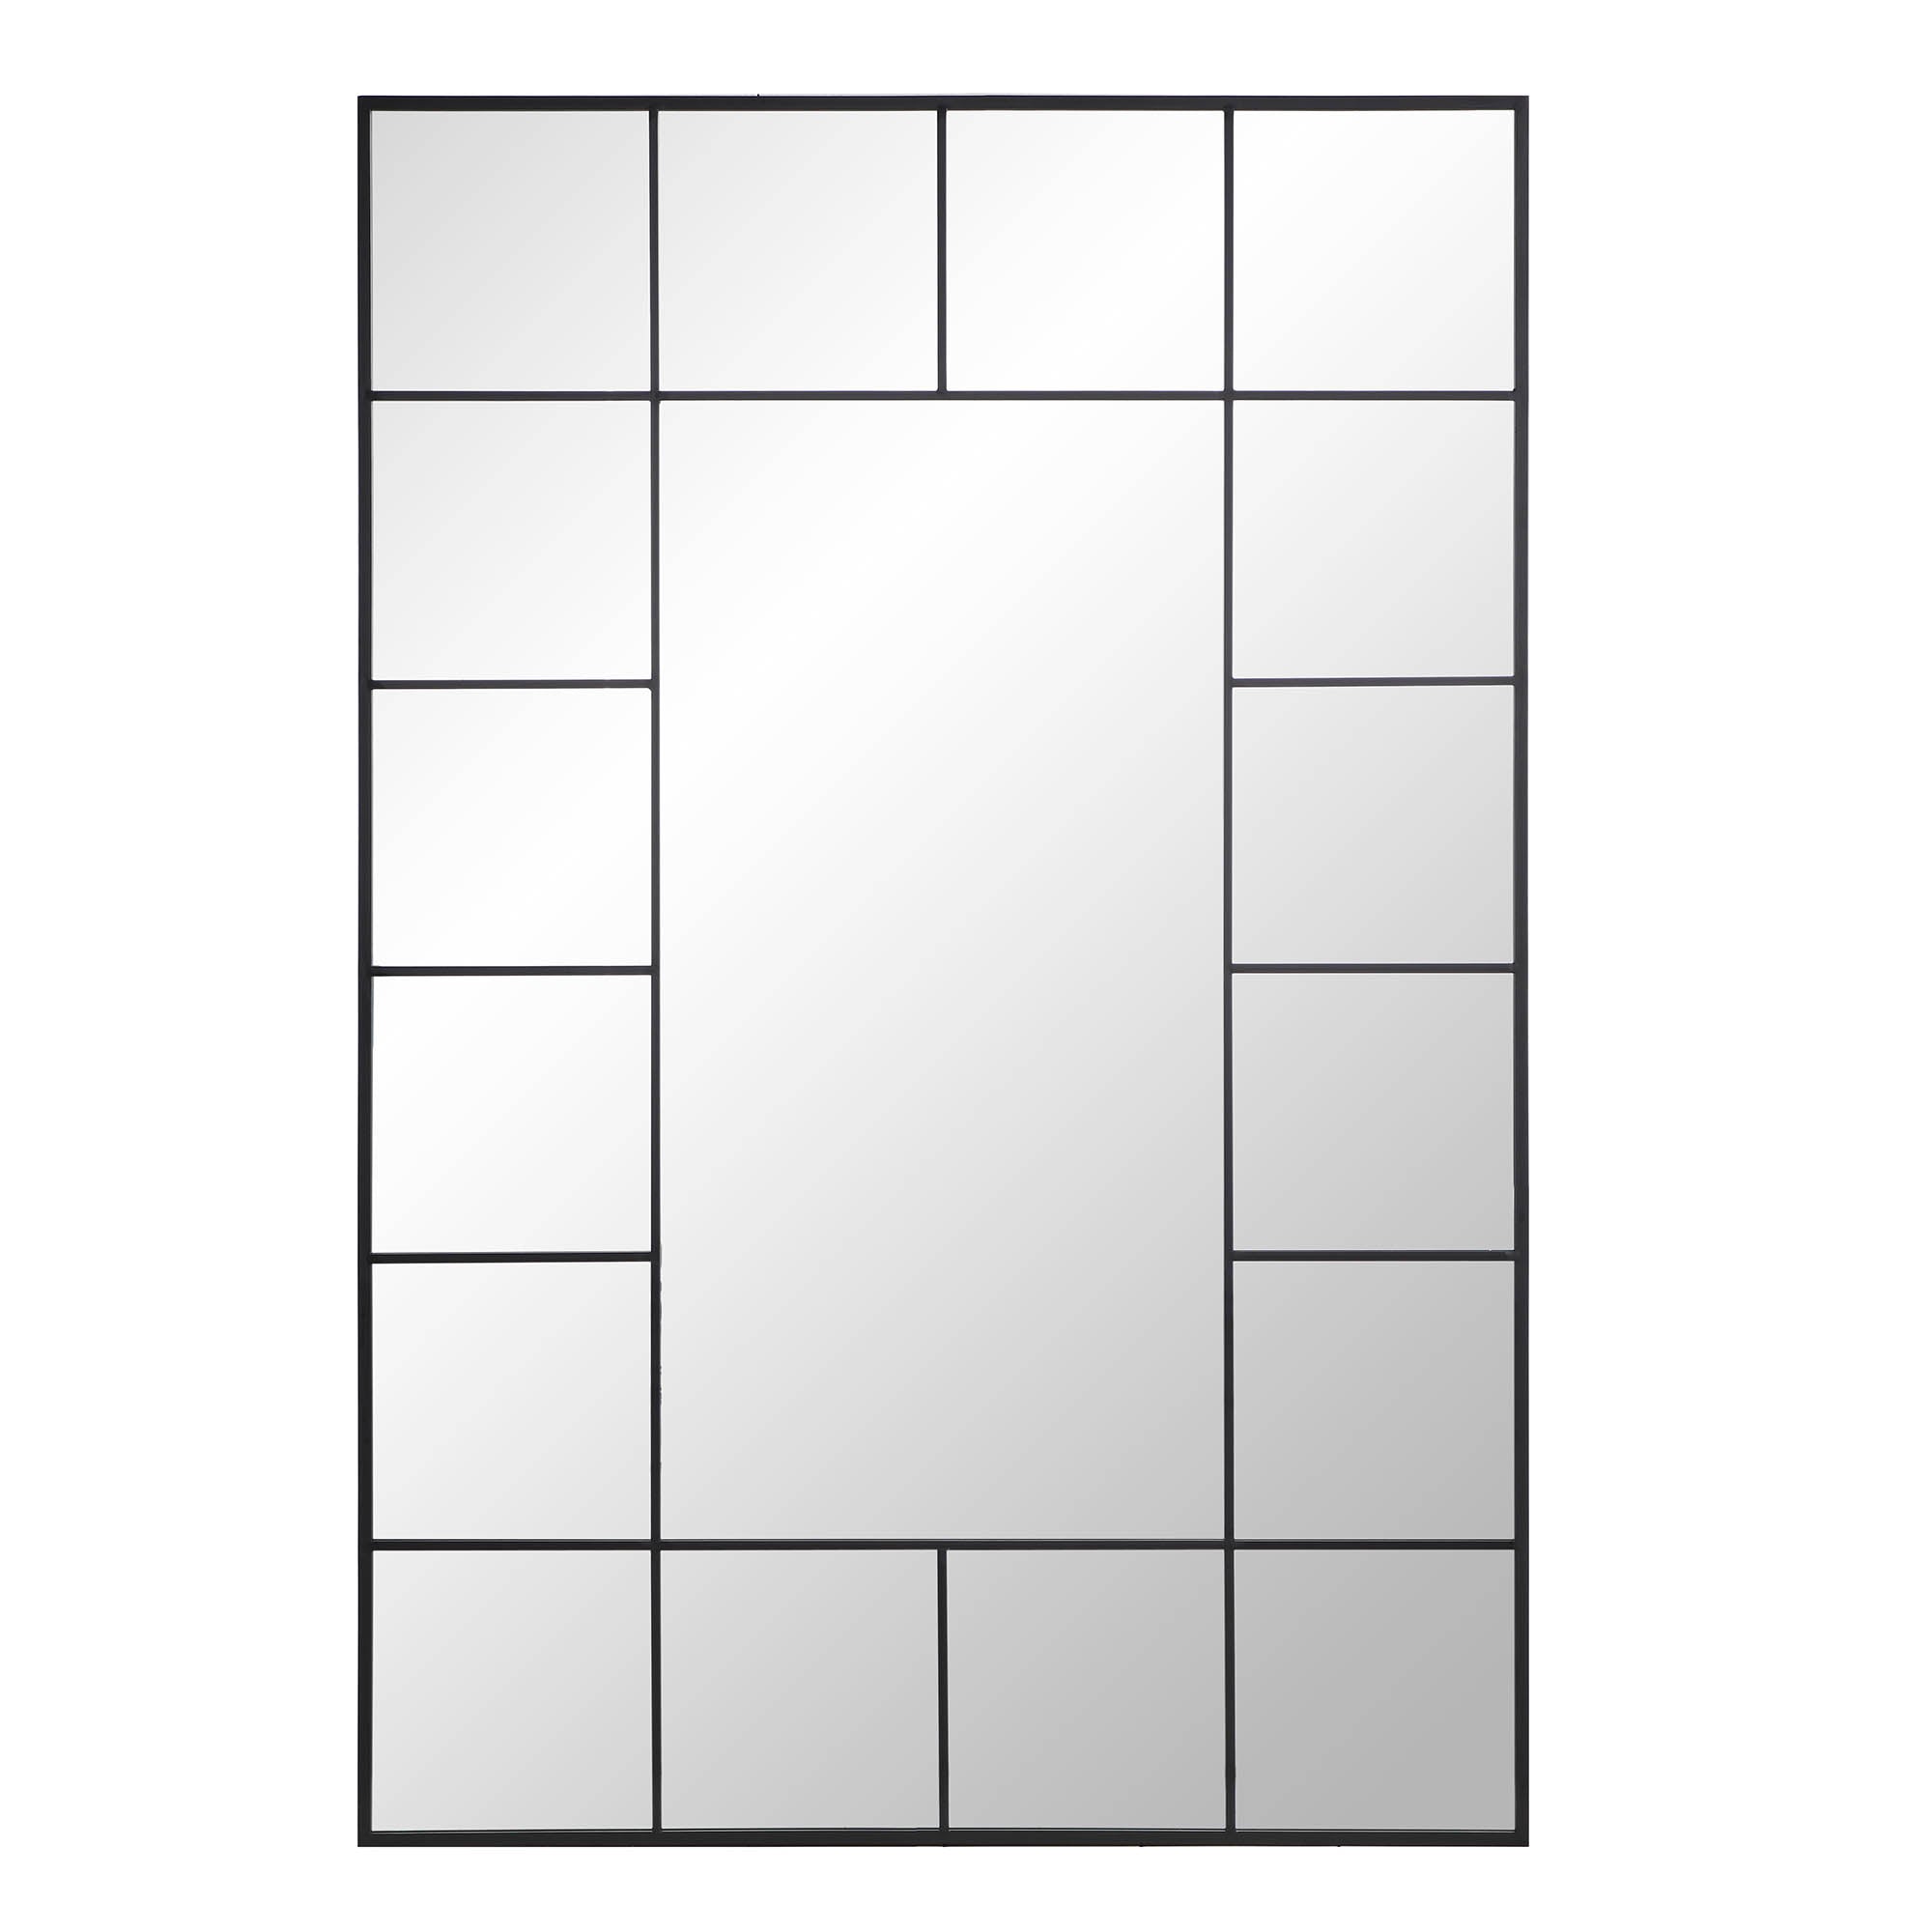 Herbert Full Length Metal Frame Window Mirror 180 x 120 cm, Black